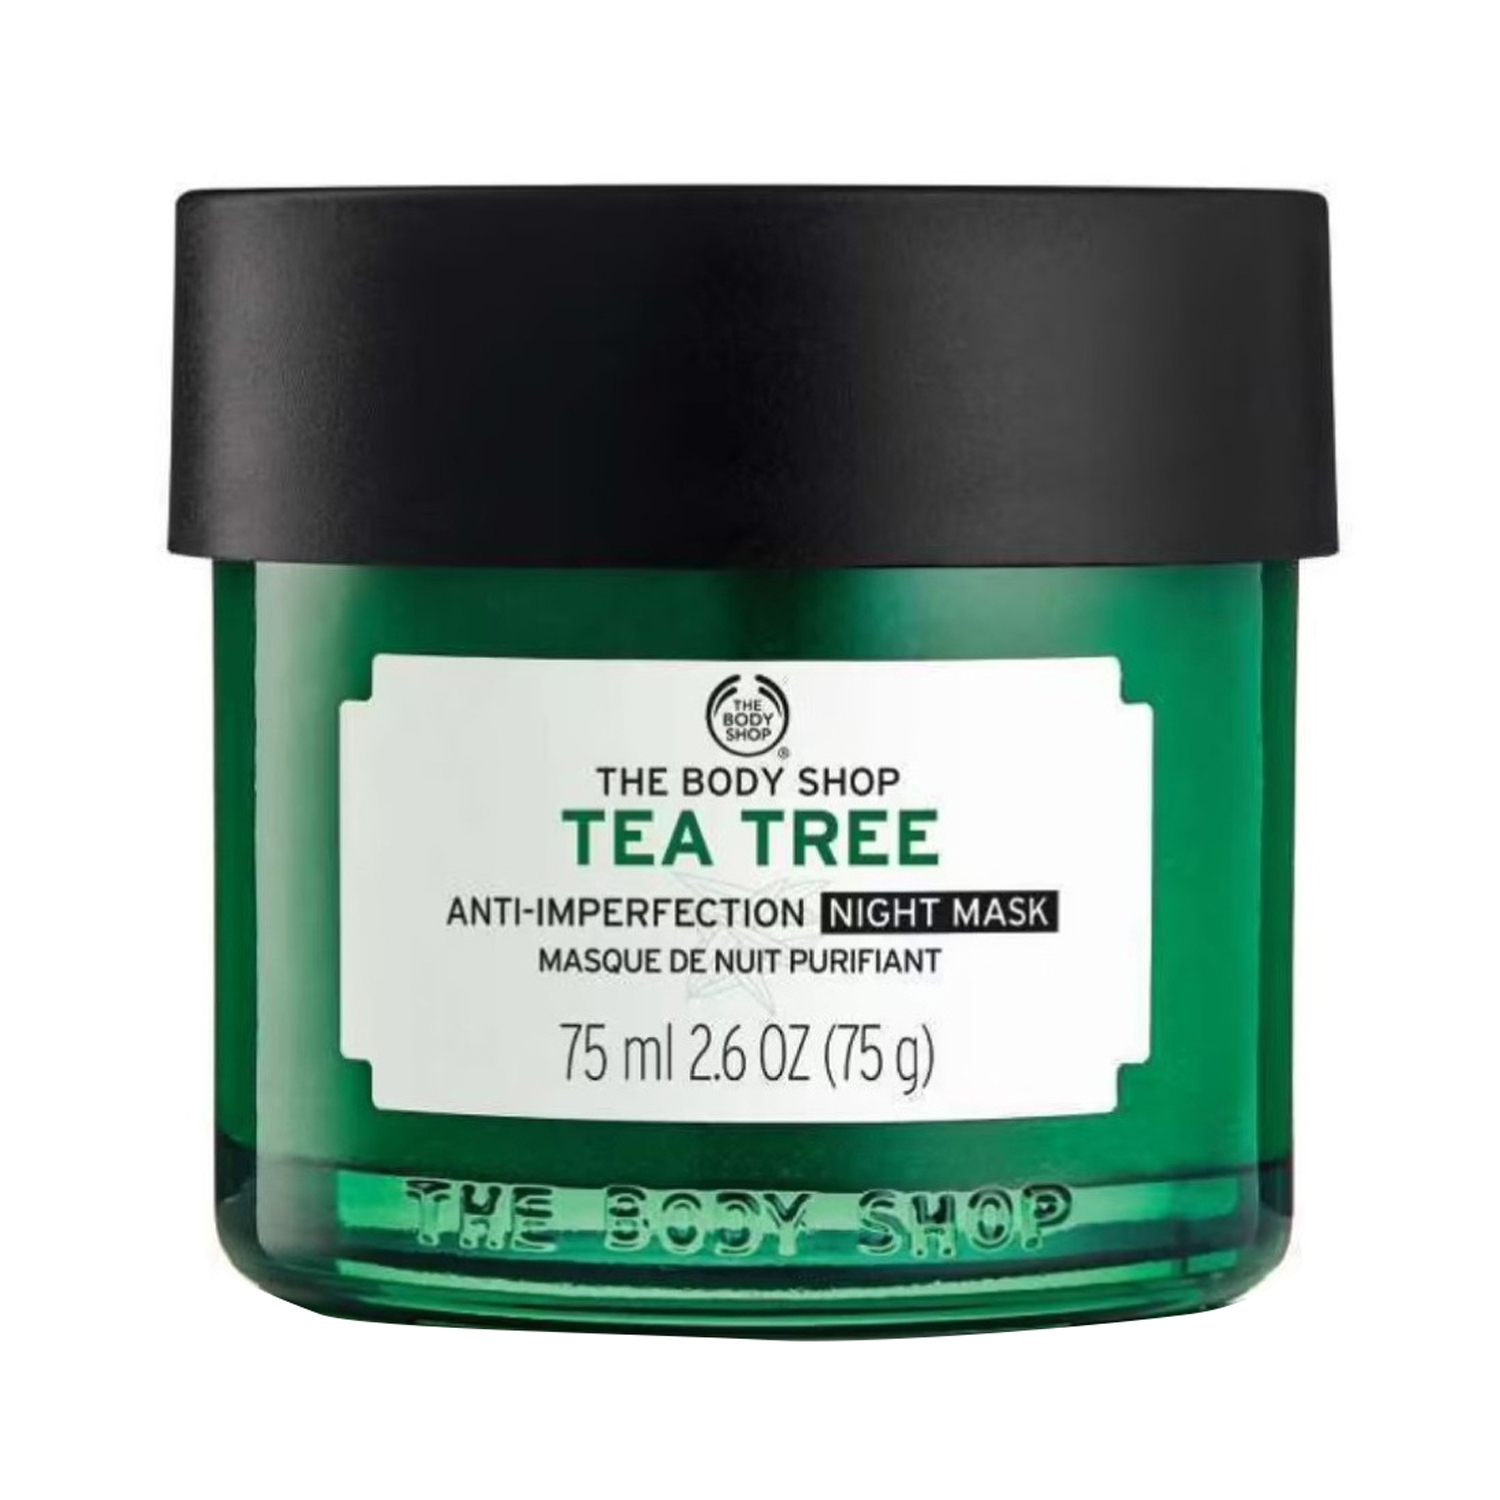 The Body Shop | The Body Shop Tea Tree Anti-Imperfection Night Mask (75ml)